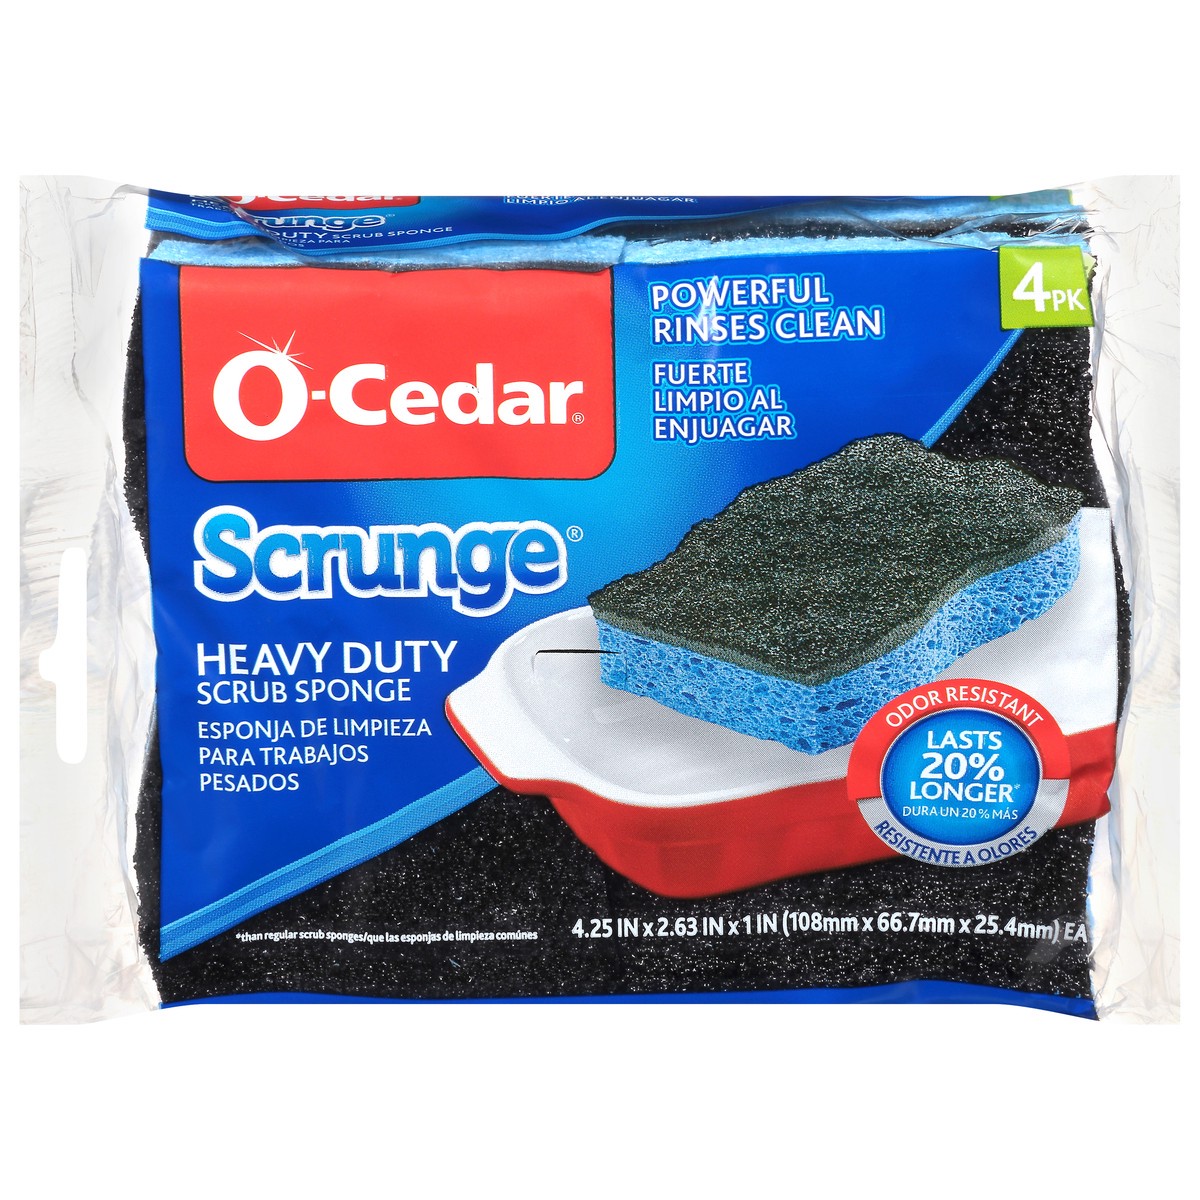 slide 1 of 9, O-Cedar Scrunge Heavy Duty Scrub Sponge 4 ea Bag, 4 ct